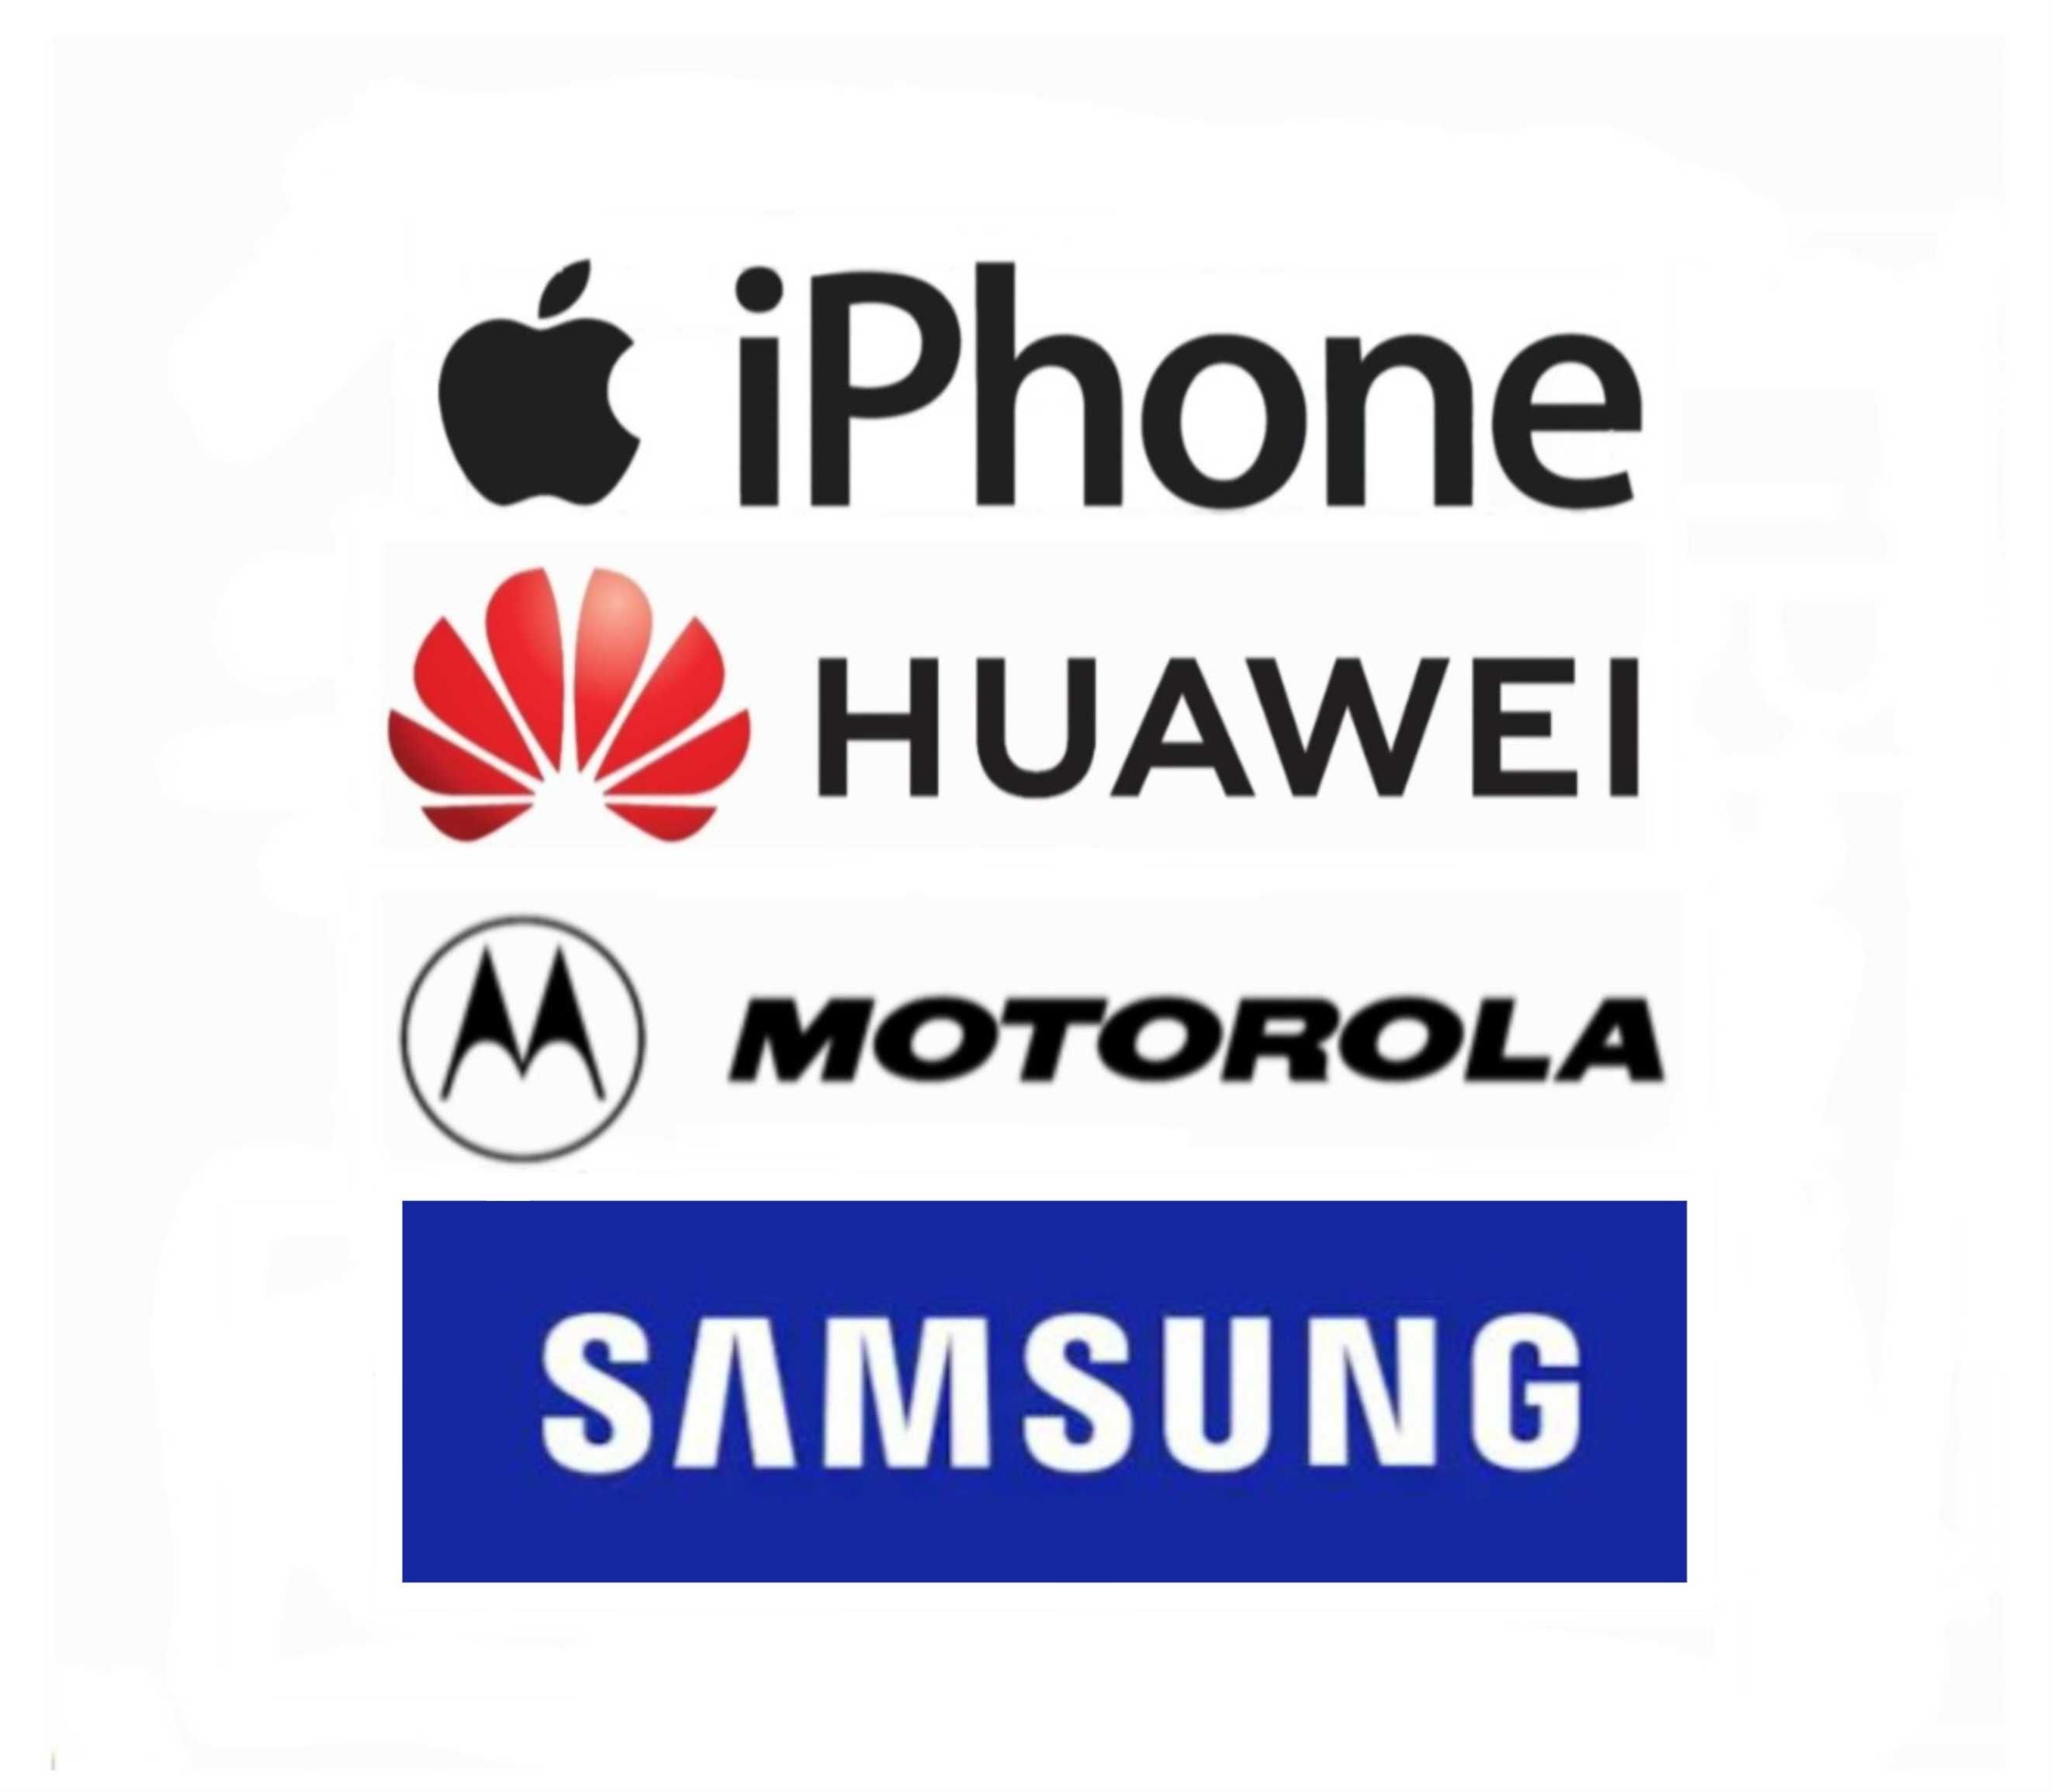 Husa Samsung , Iphone 11, Motorola. Huawei folie.